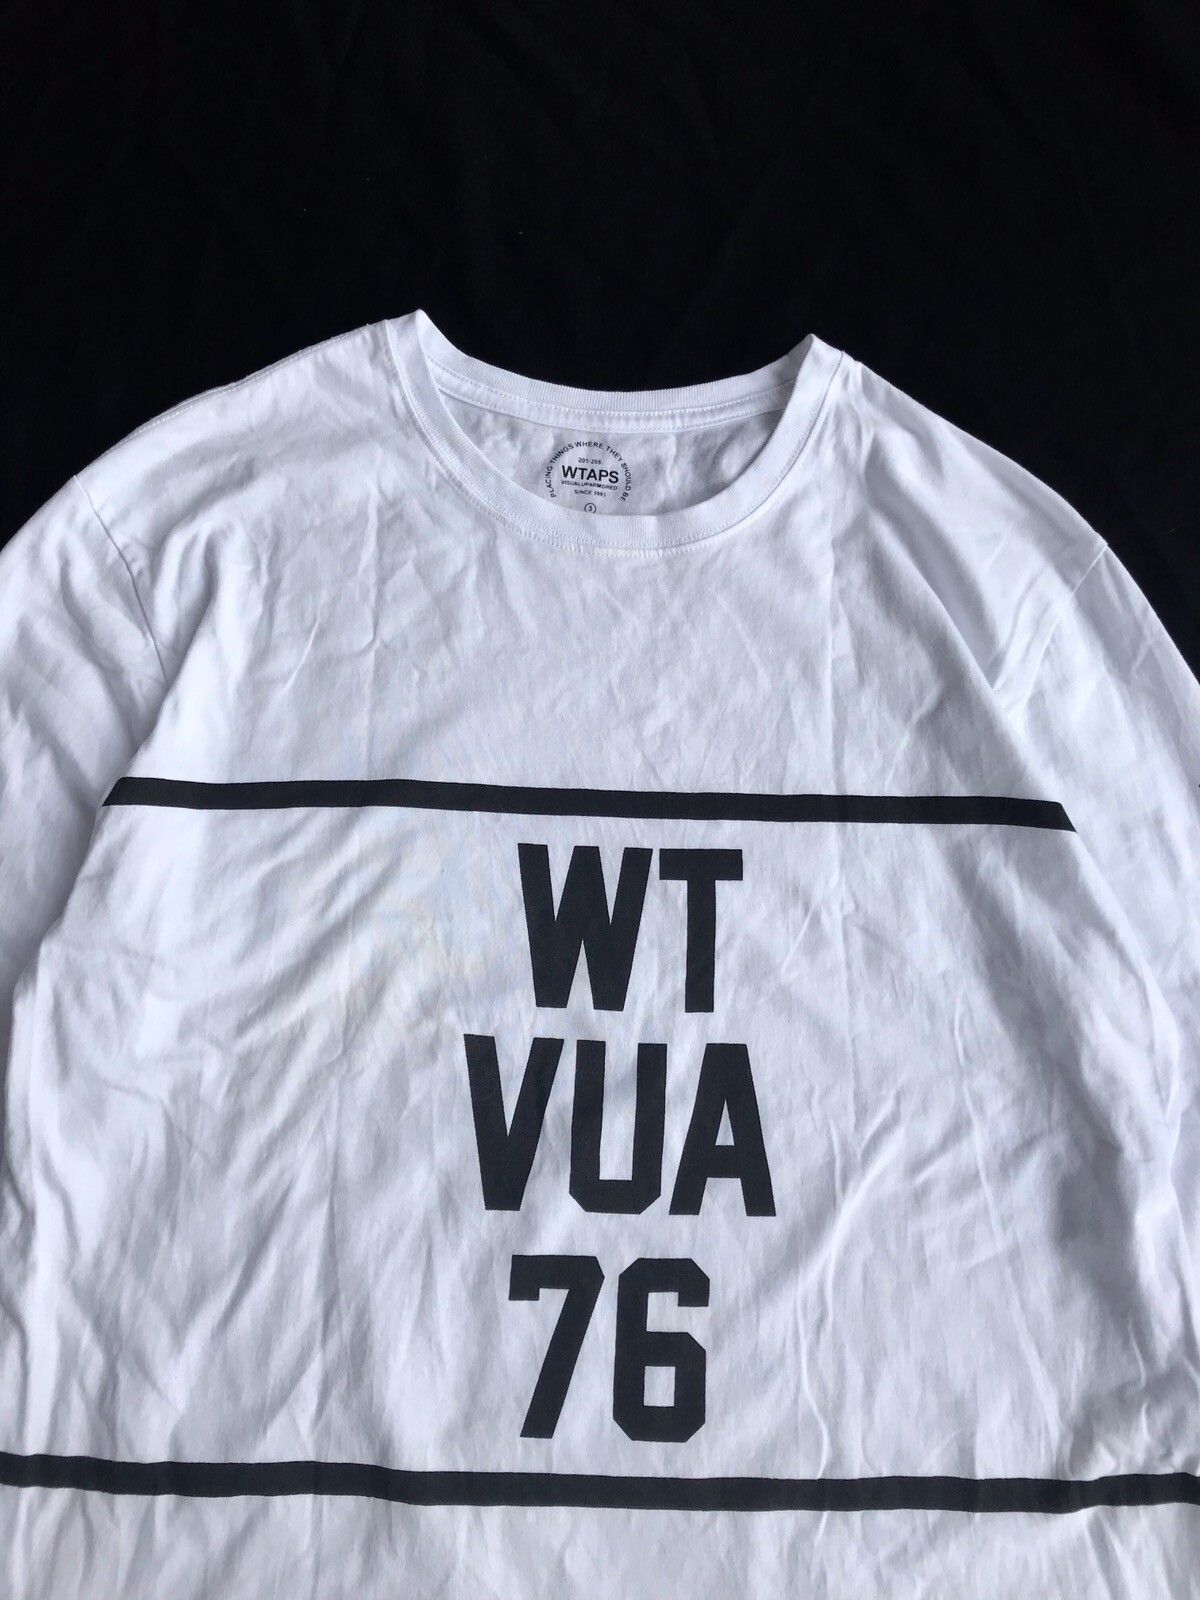 Wtaps WTVUA76 Long Sleeve Tshirt Made in Japan - 2